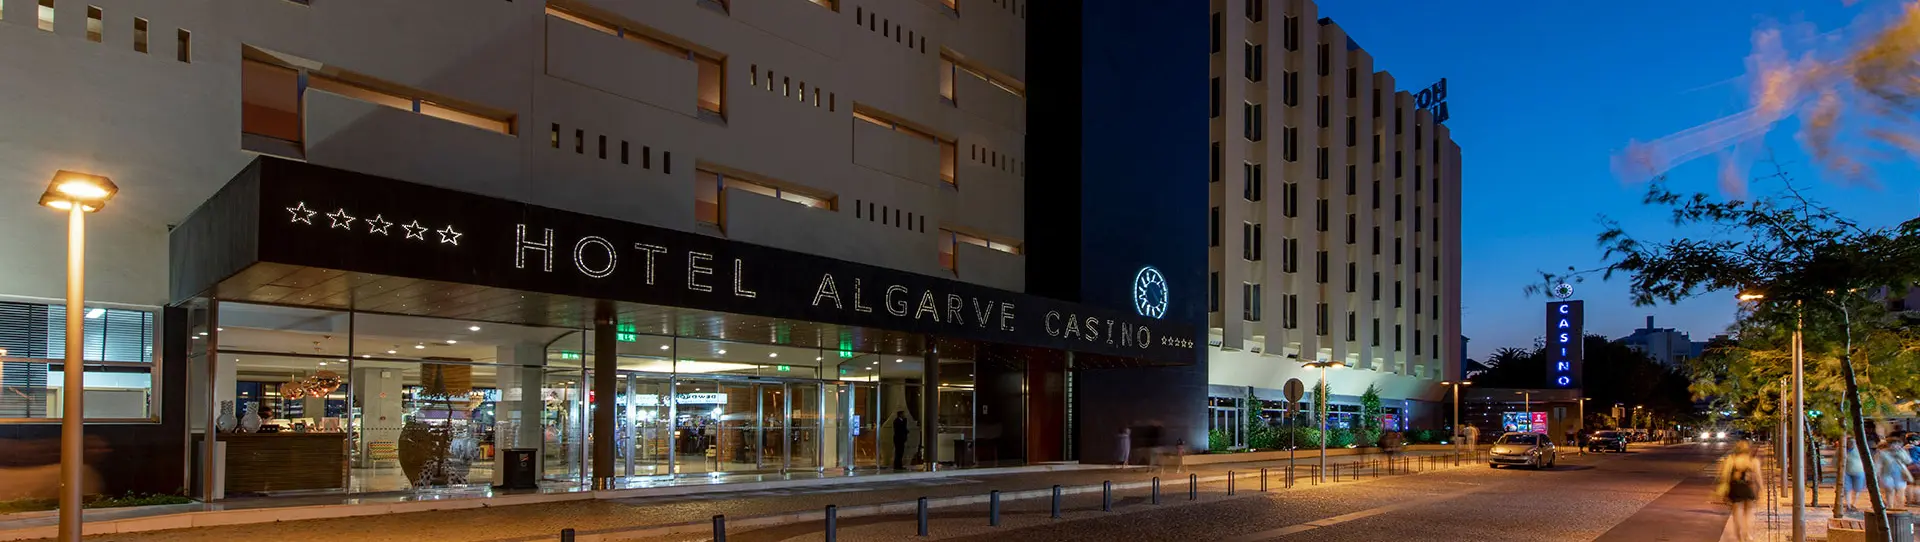 Portugal golf holidays - Algarve Casino Hotel - Photo 3